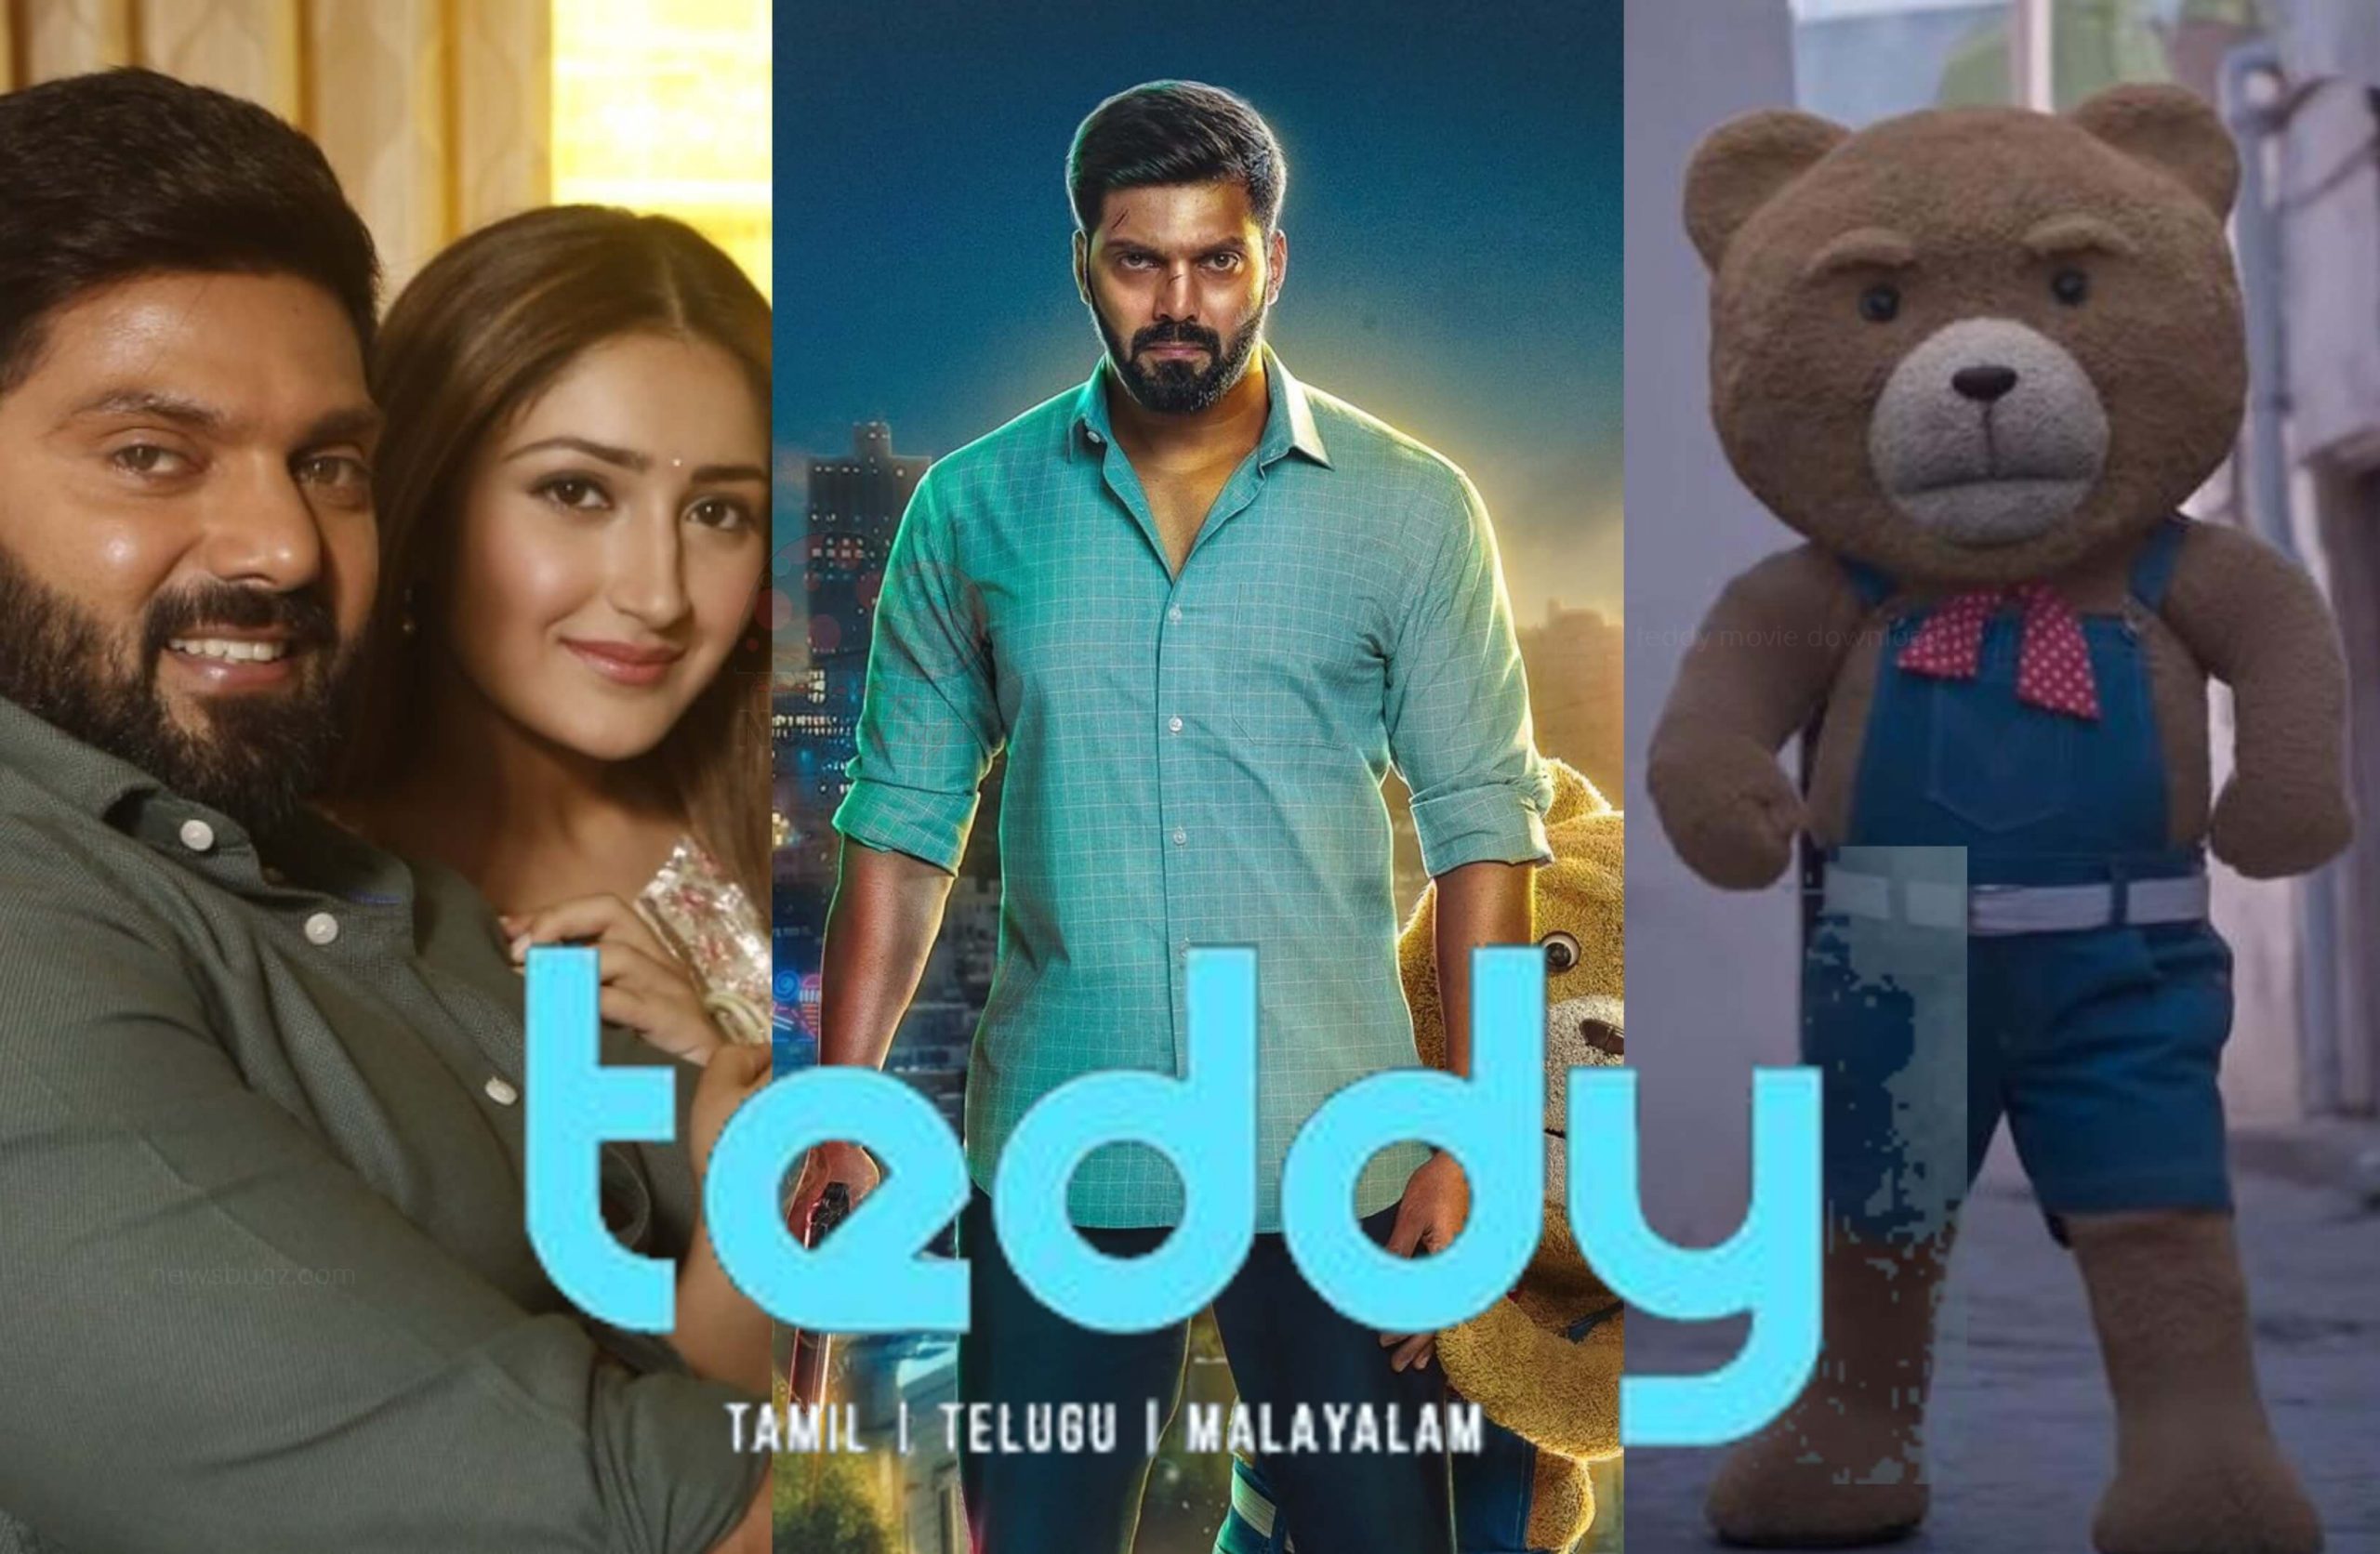 thiruttuvcd new tamil movies download